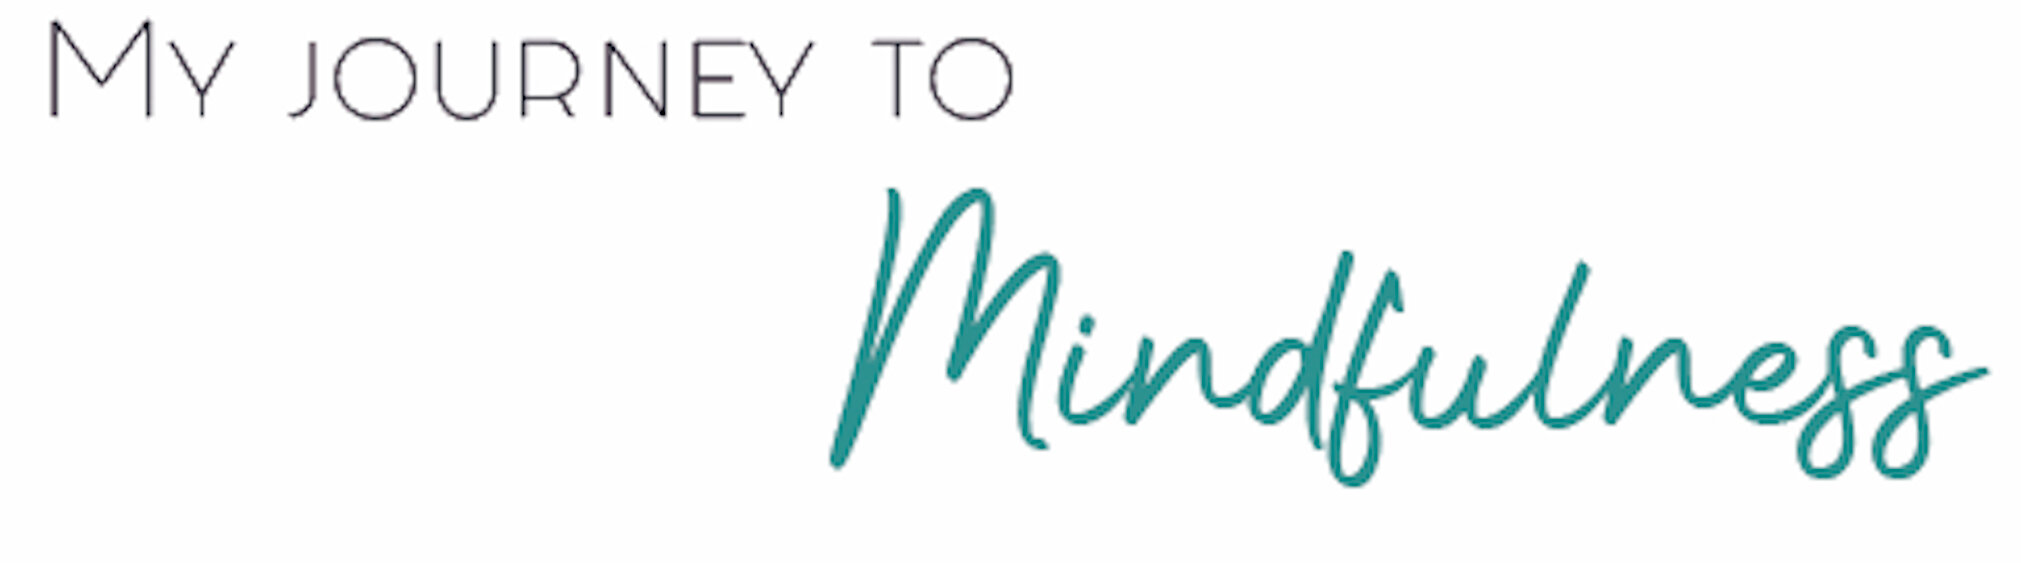 My Journey to Mindfulness